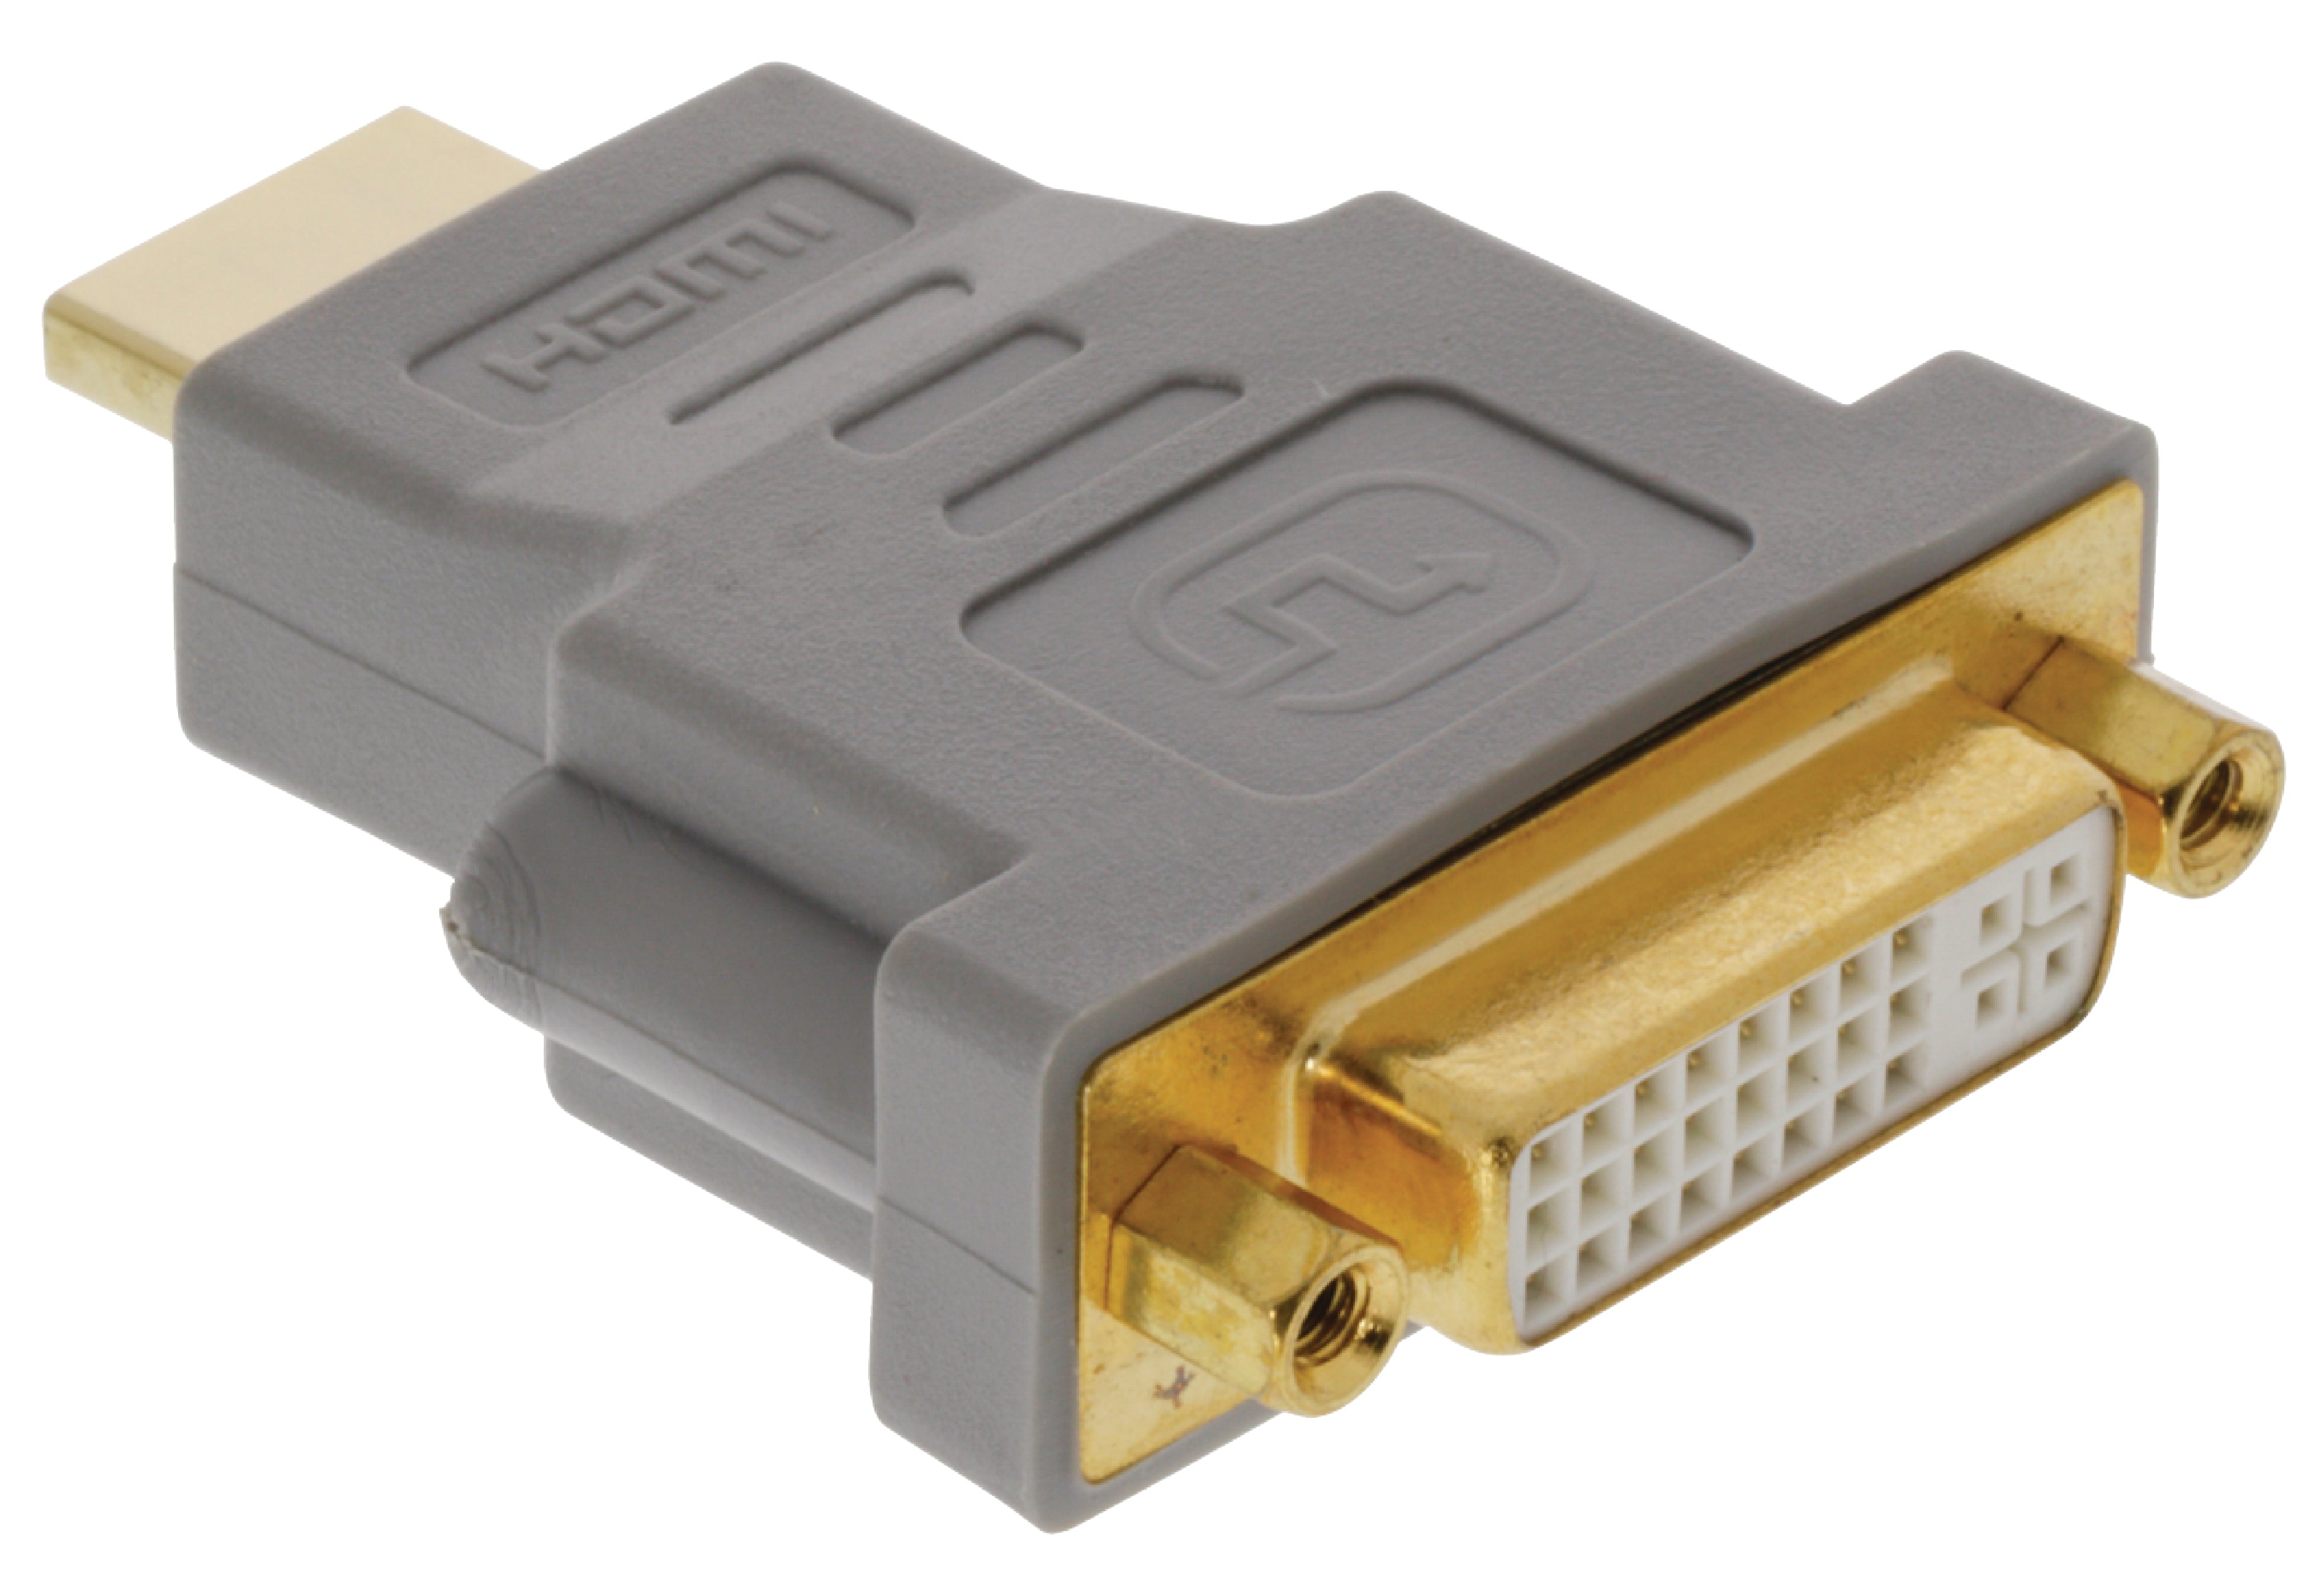 High-Speed-HDMI Adapter HDMI Anschluss - DVI-D 24+1p Buchse Grau